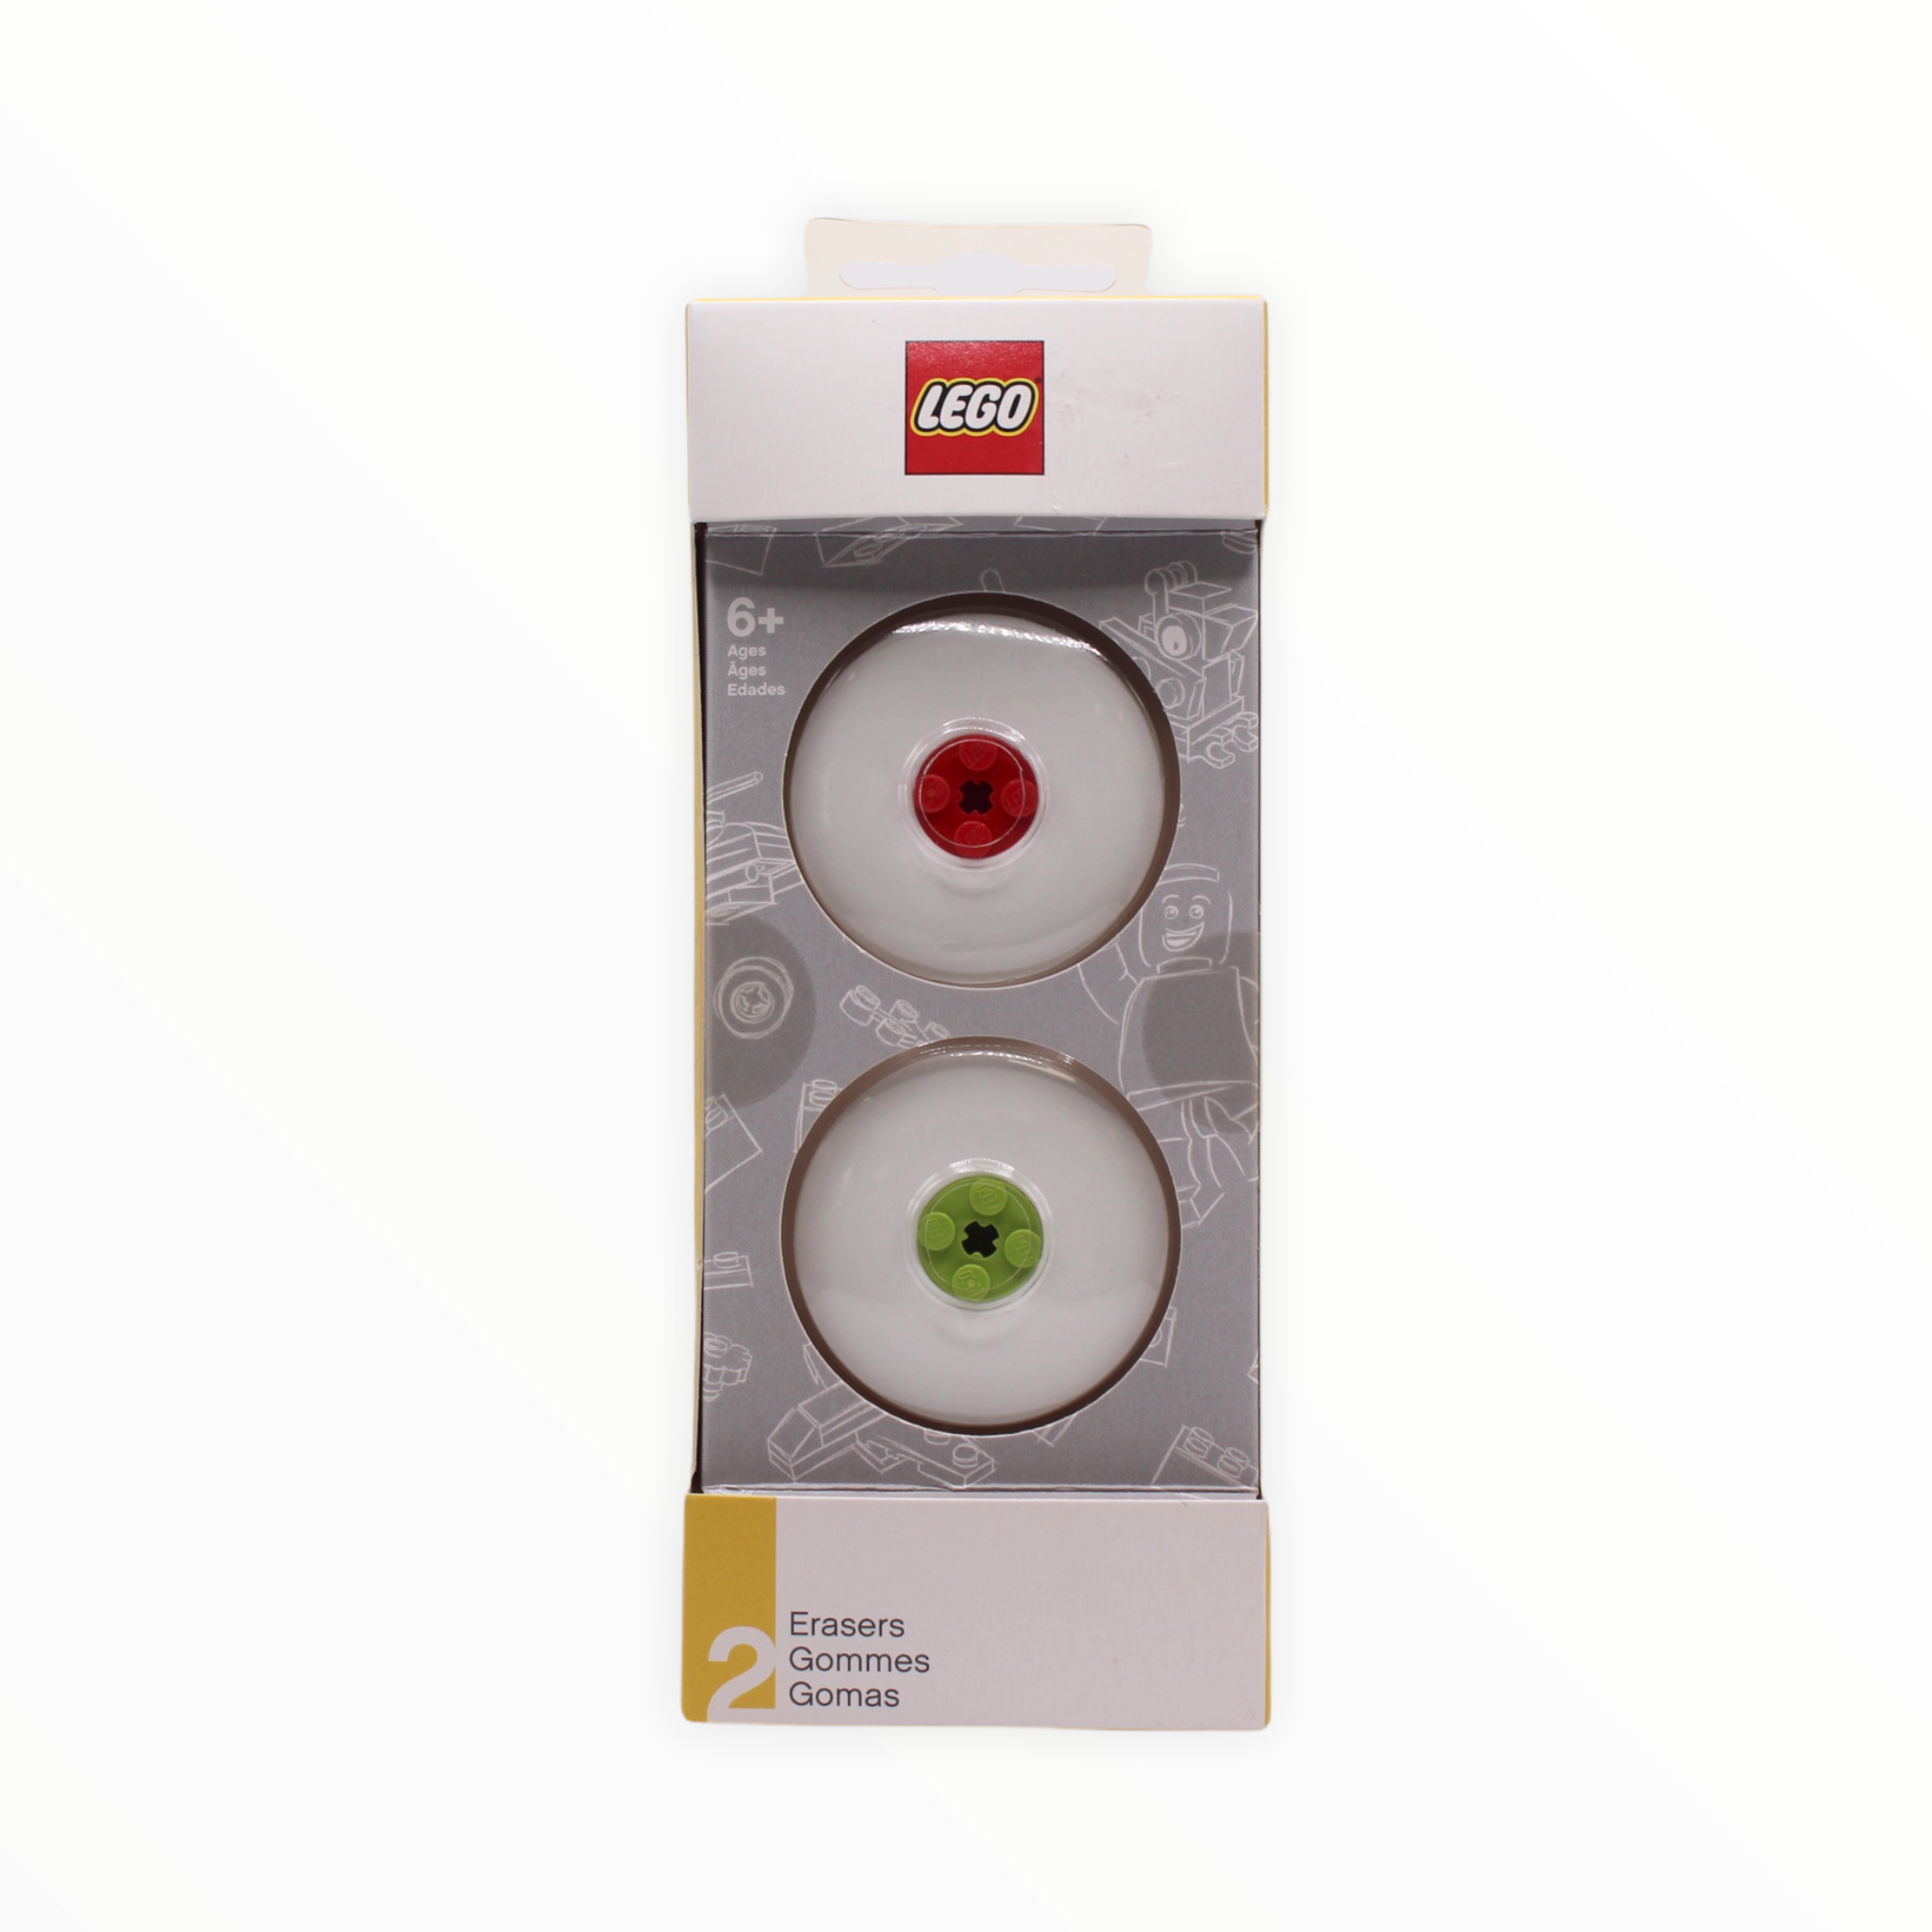 LEGO Erasers